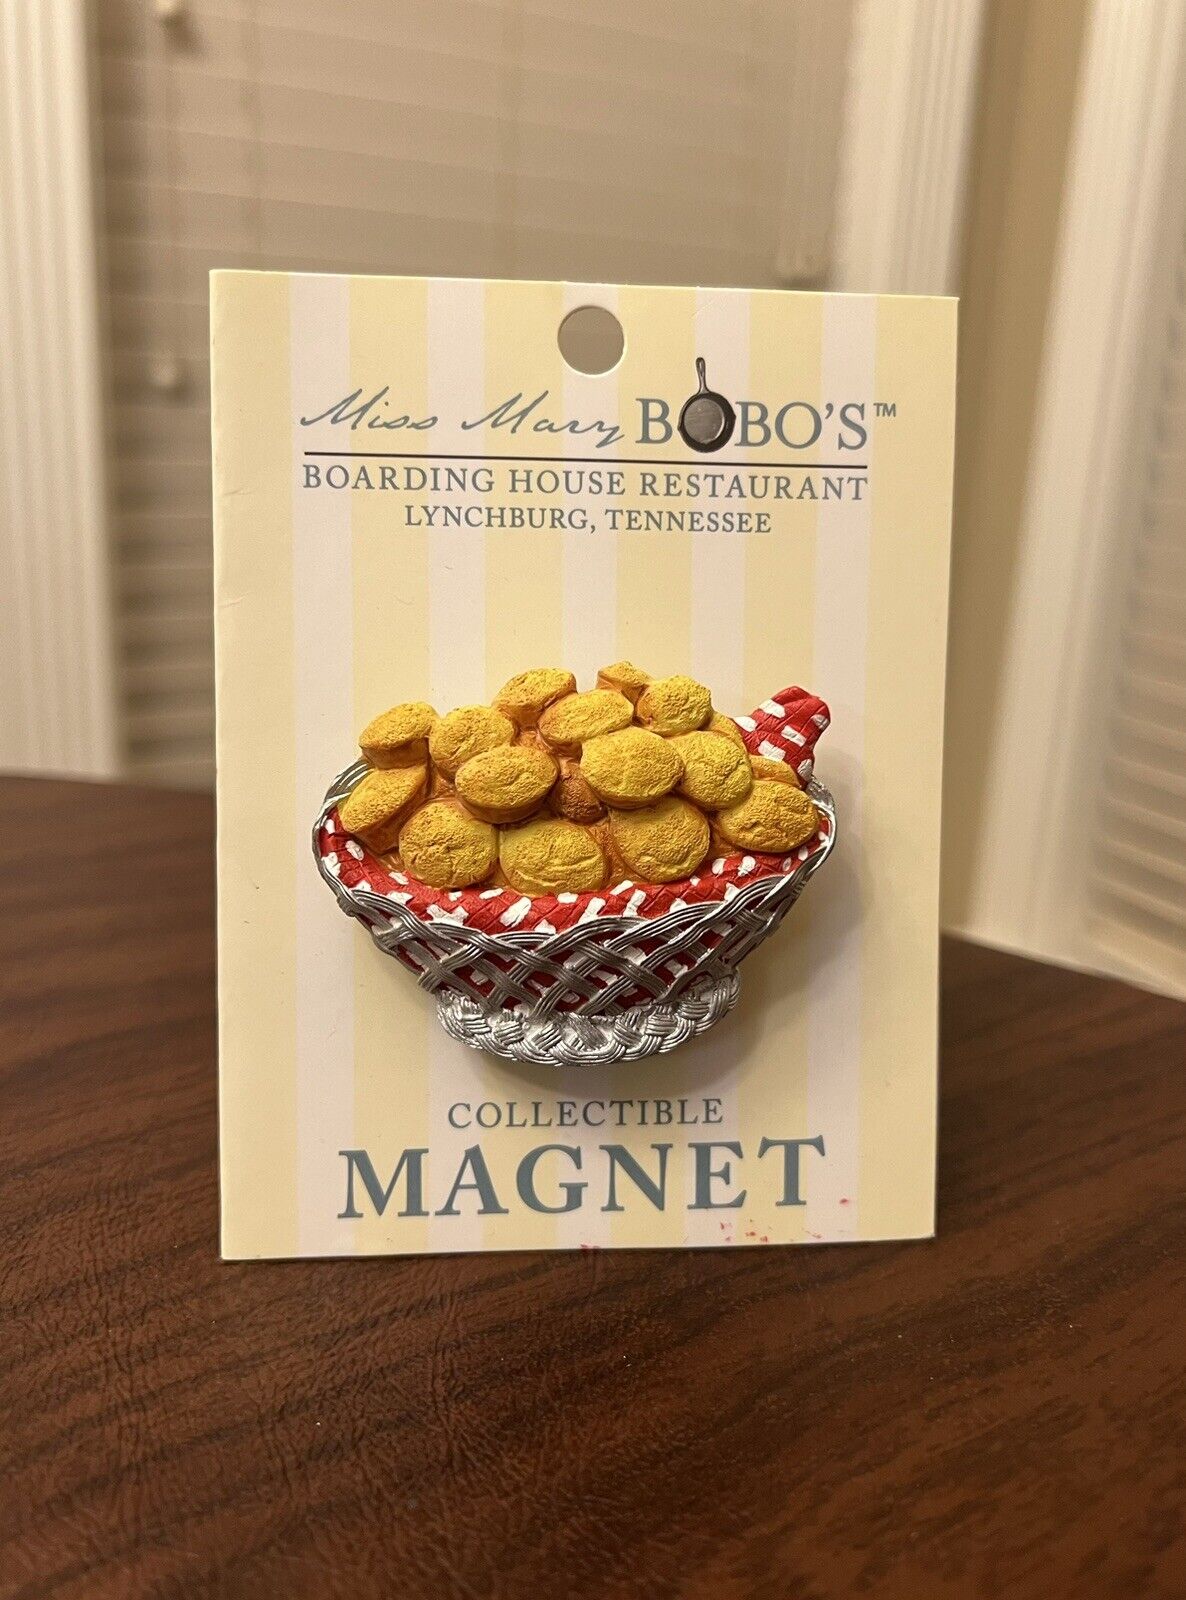 3D Food Cornbread Muffins Basket Refrigerator Fridge Magnet Miss Mary Bobo’s